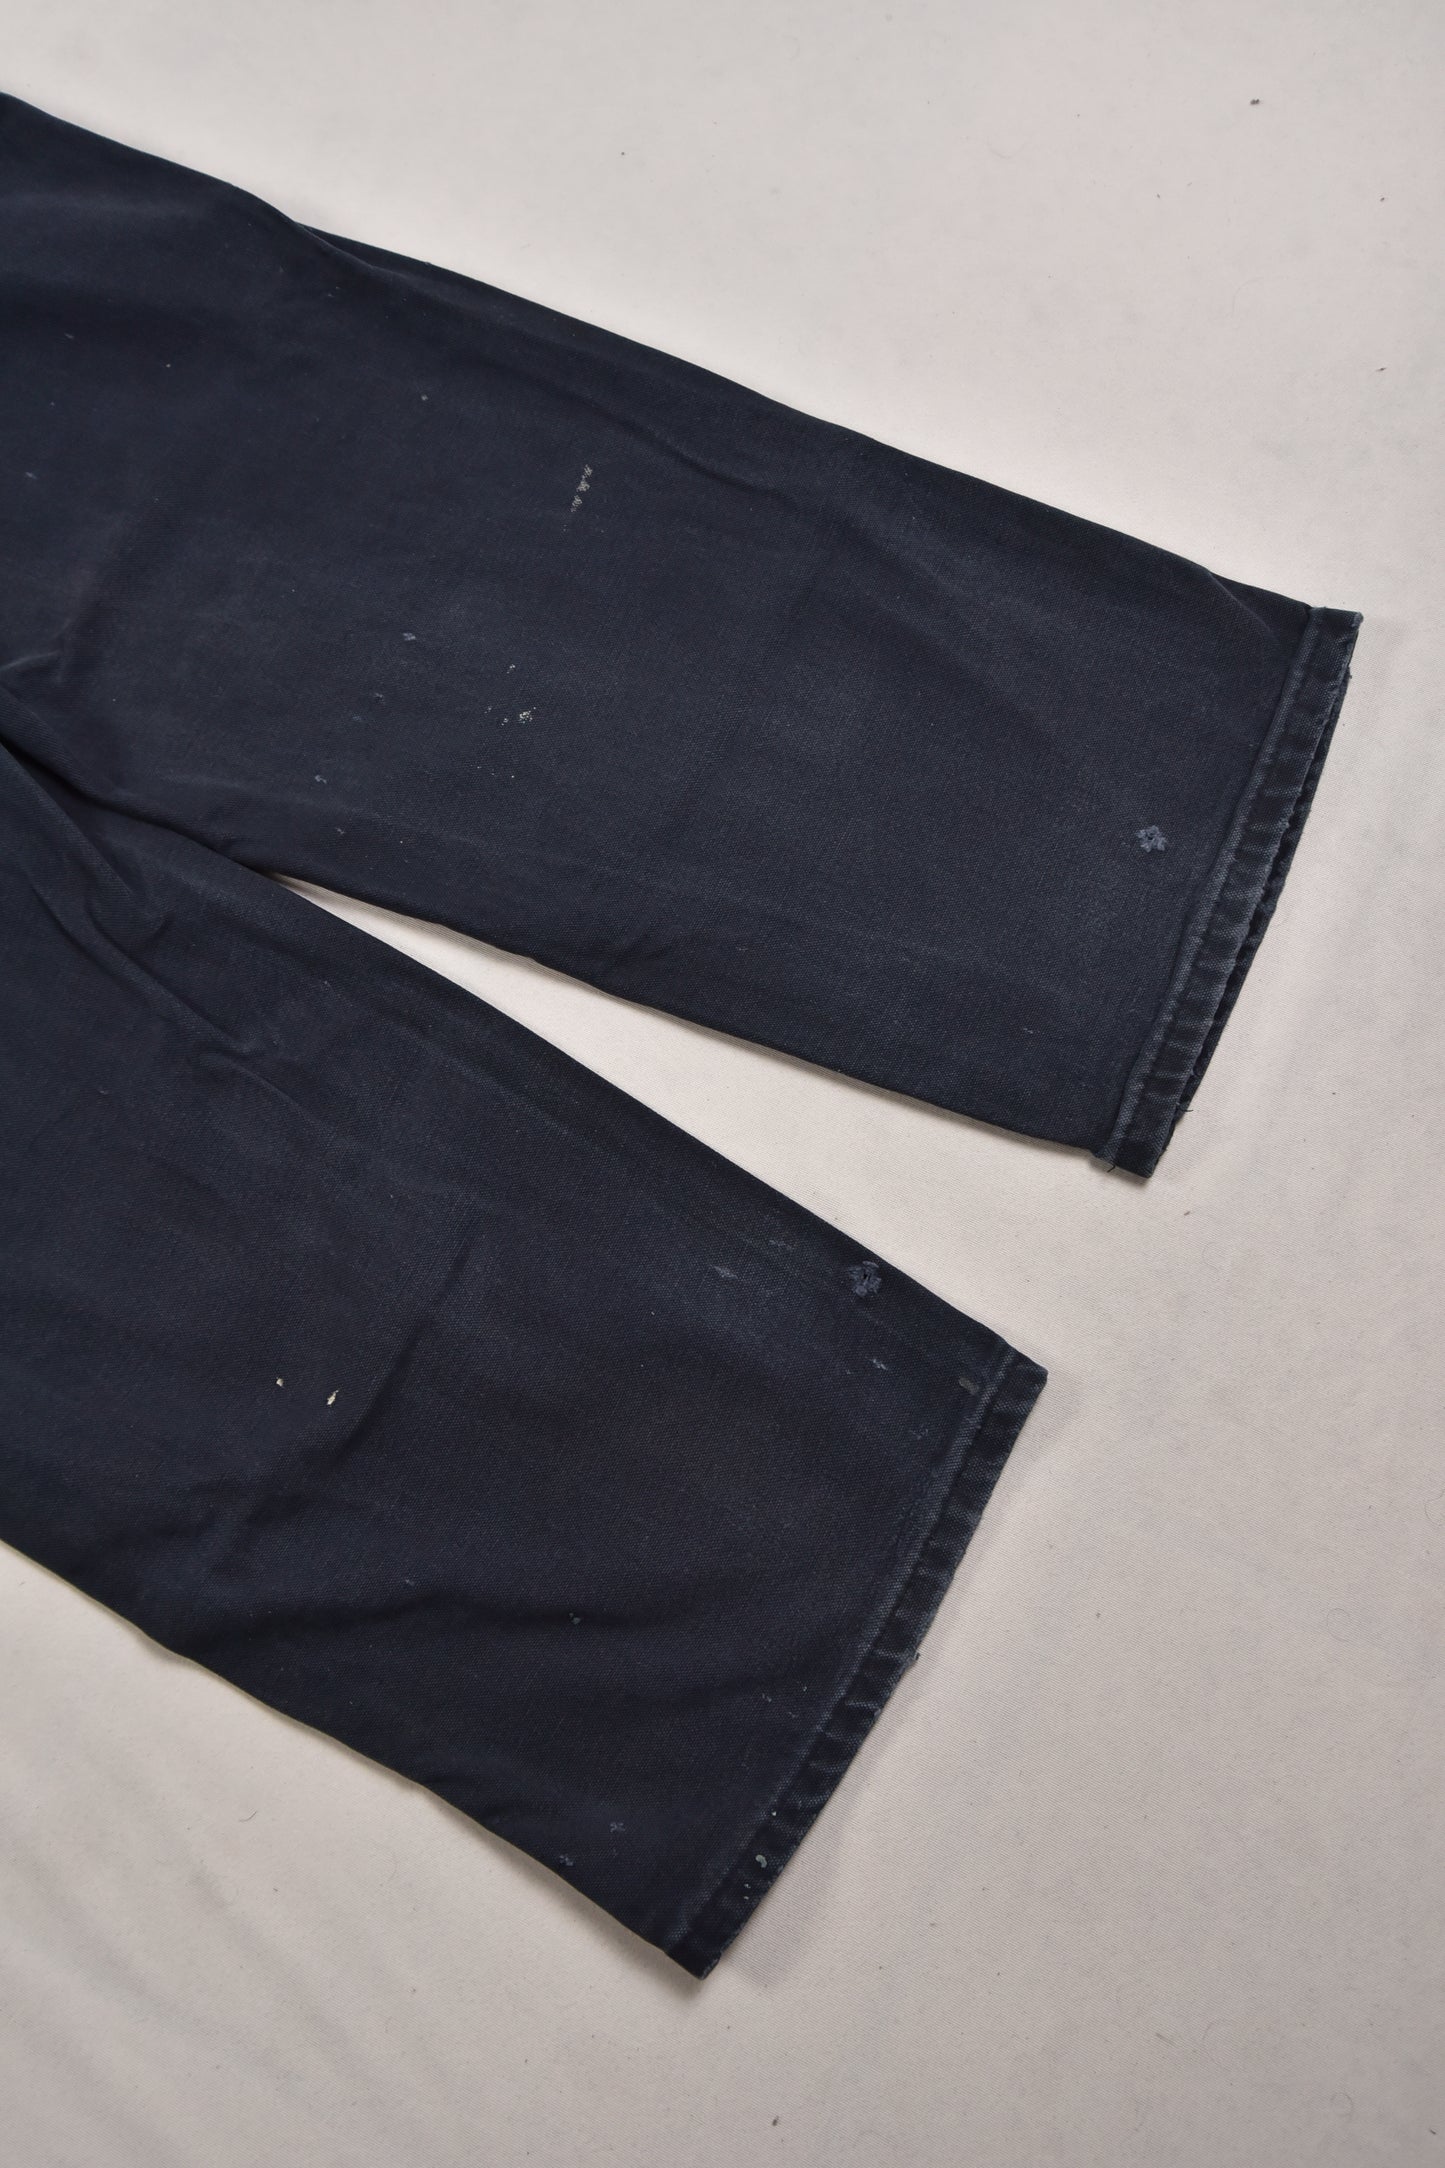 Carhartt Workwear Pants Vintage / 36x32